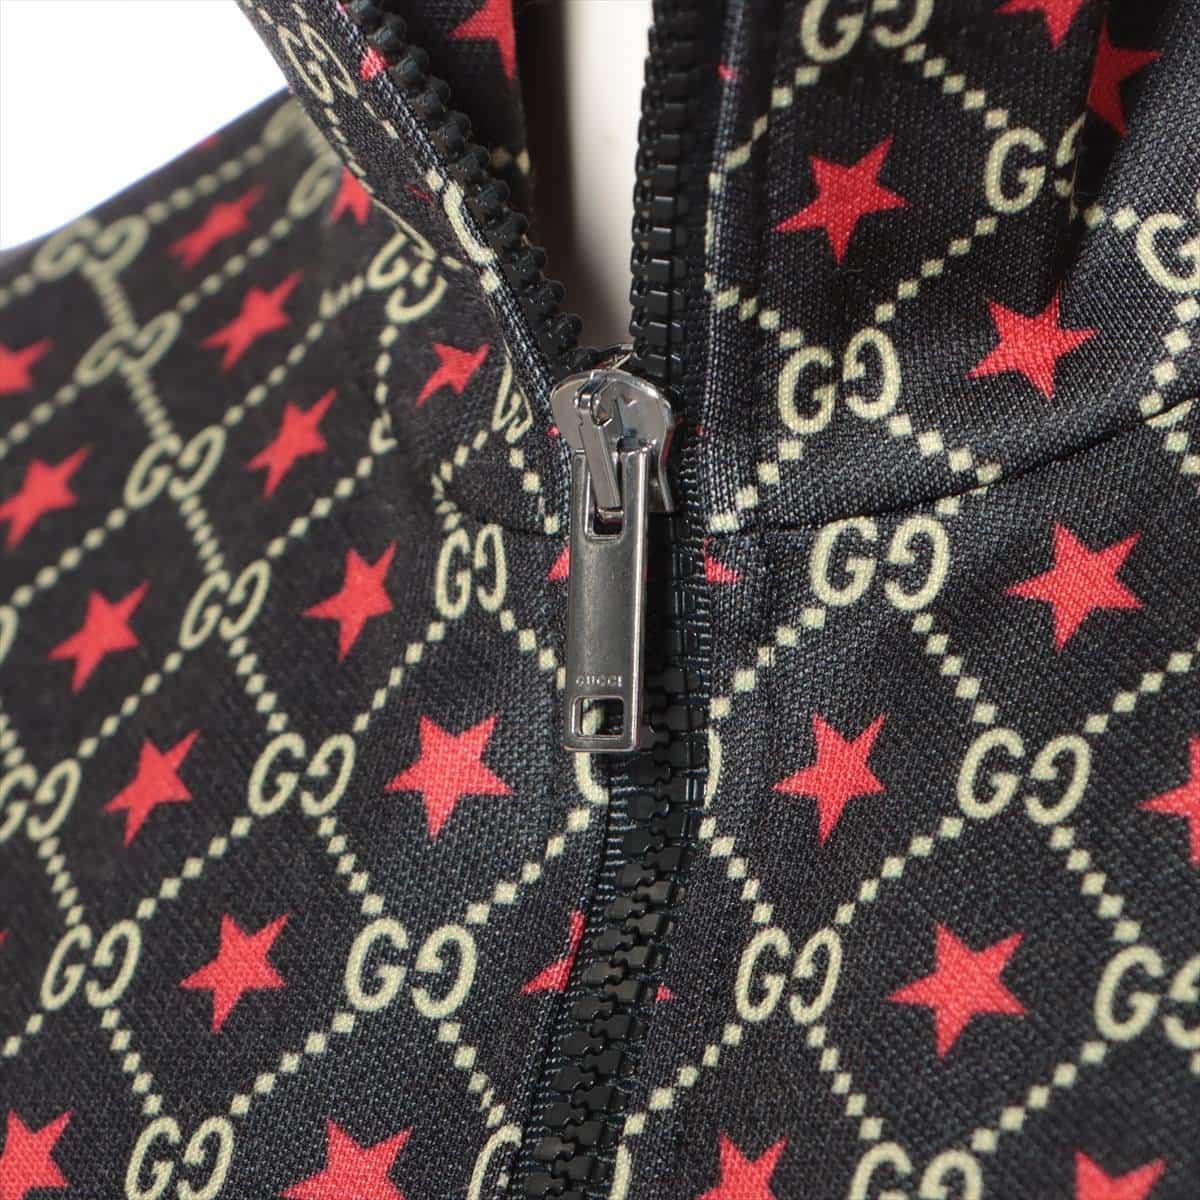 Gucci GG Star Cotton & polyester Sweatsuit L Men's Black  575734